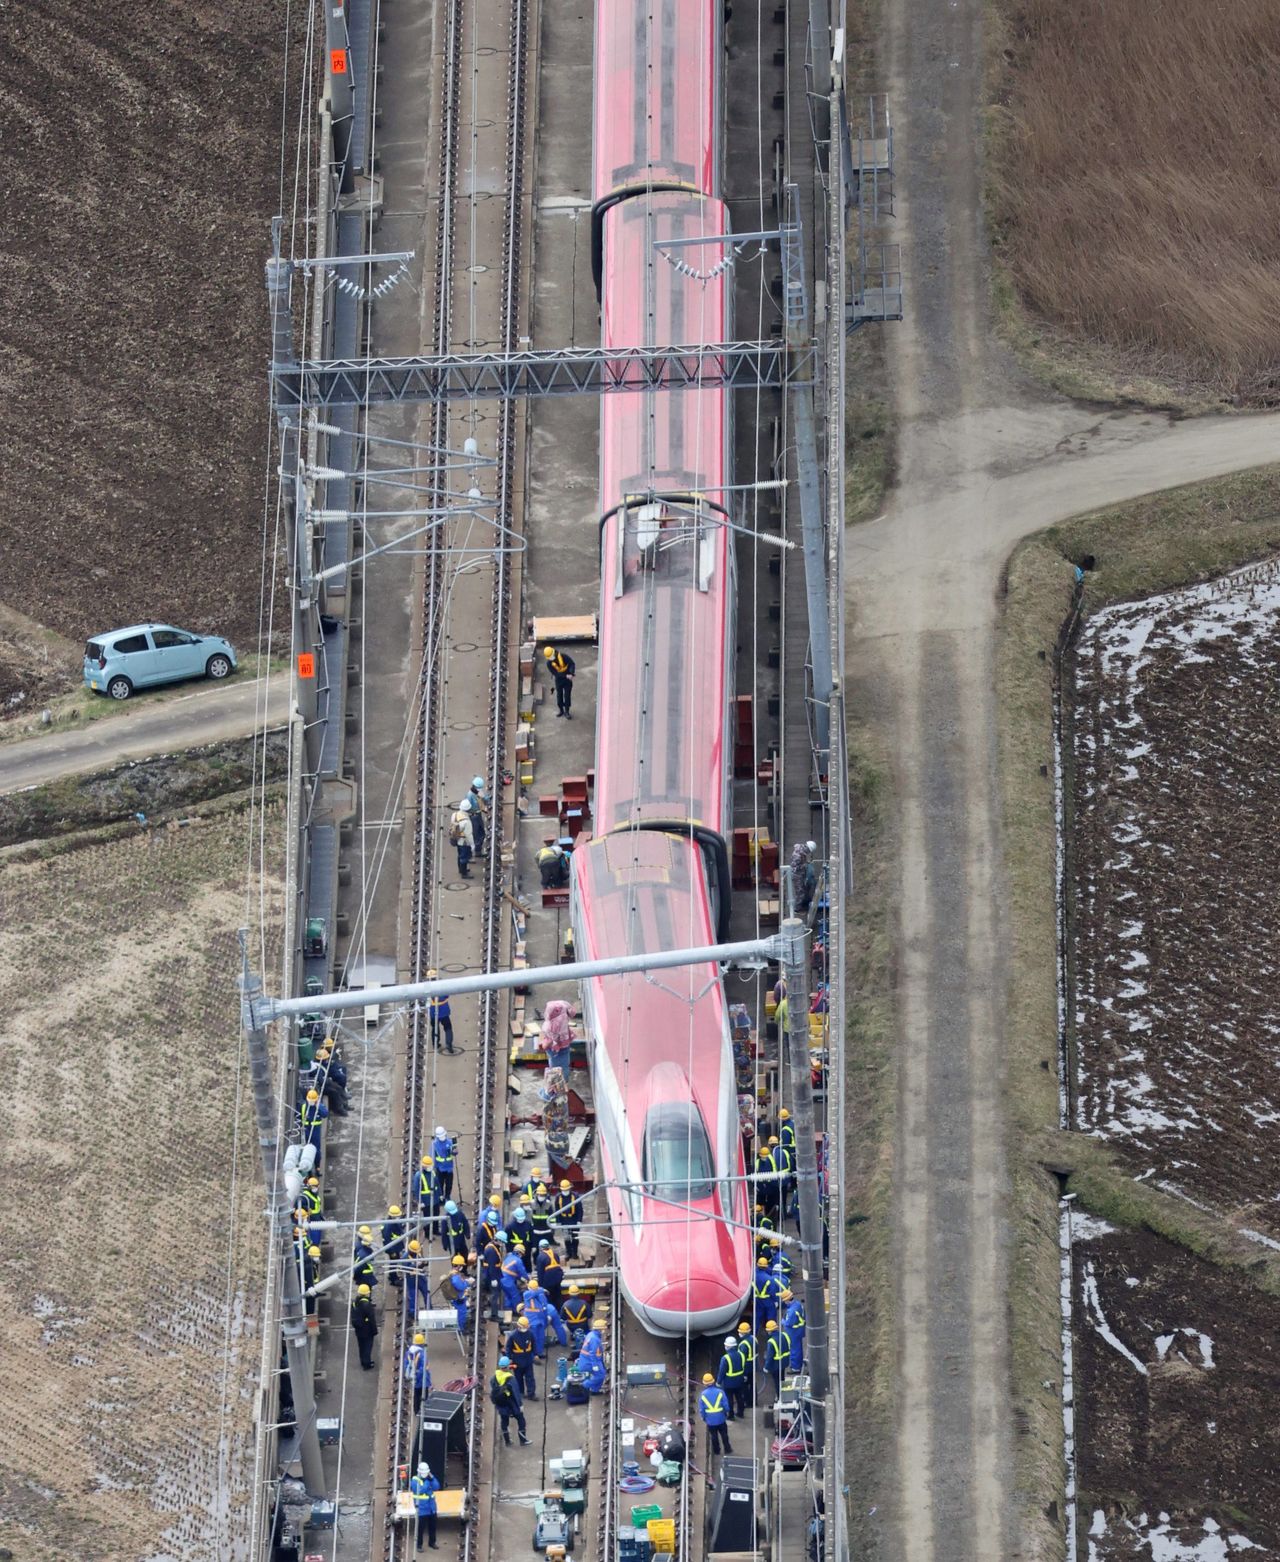 Workers attend to a Tōhoku Shinkansen with derailed cars in Shiroishi, Miyagi Prefecture, on March 20, 2022. (© Jiji)